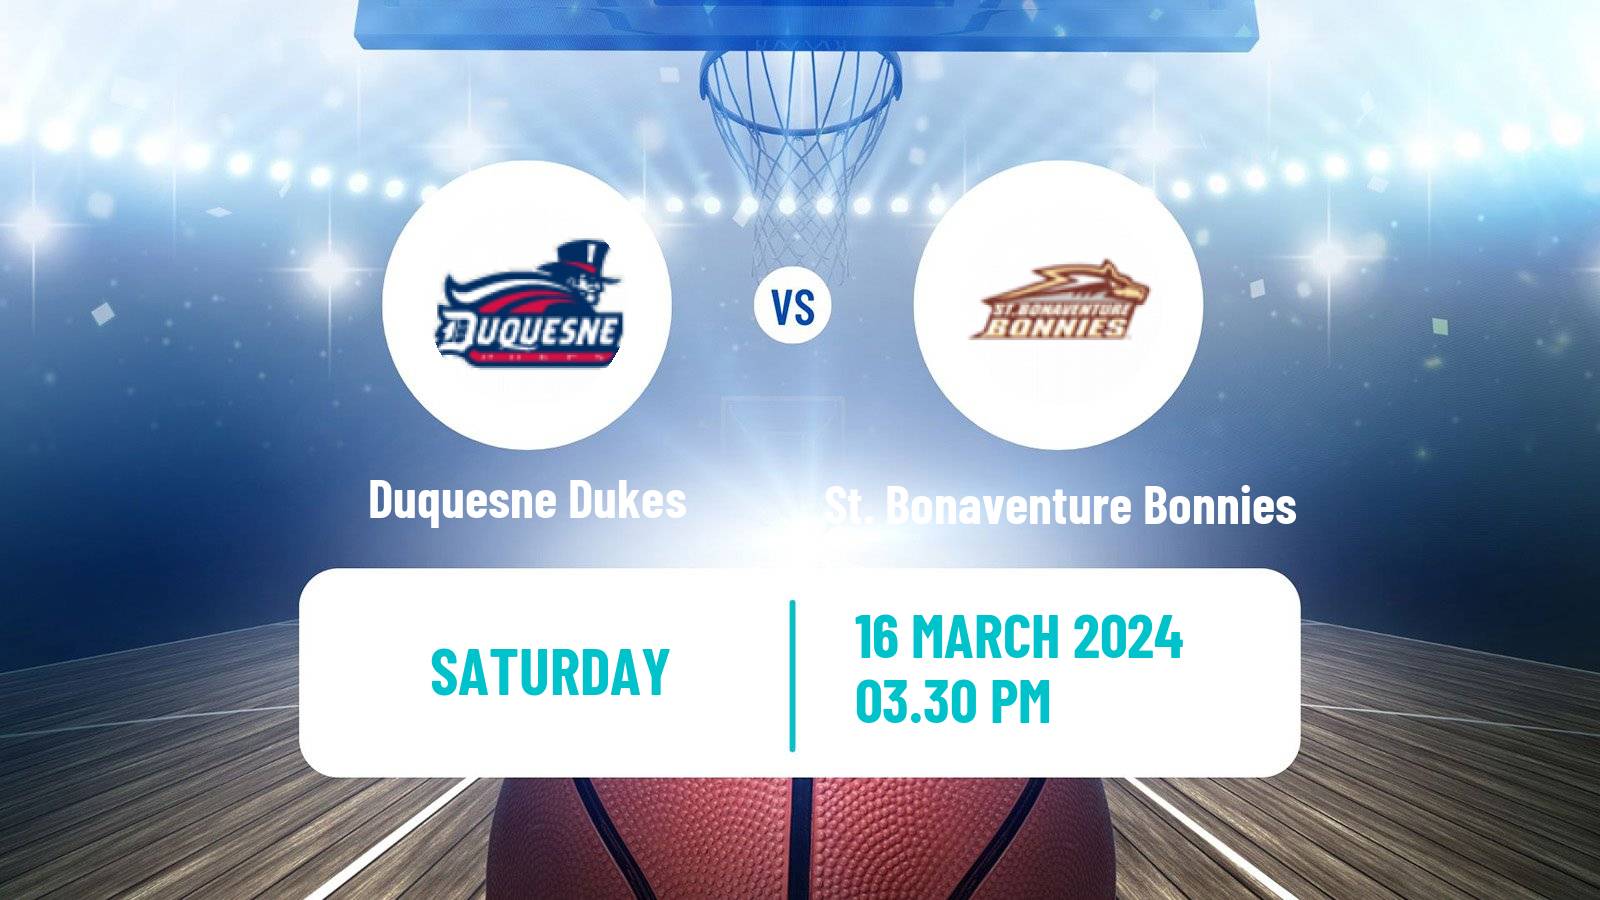 Basketball NCAA College Basketball Duquesne Dukes - St. Bonaventure Bonnies